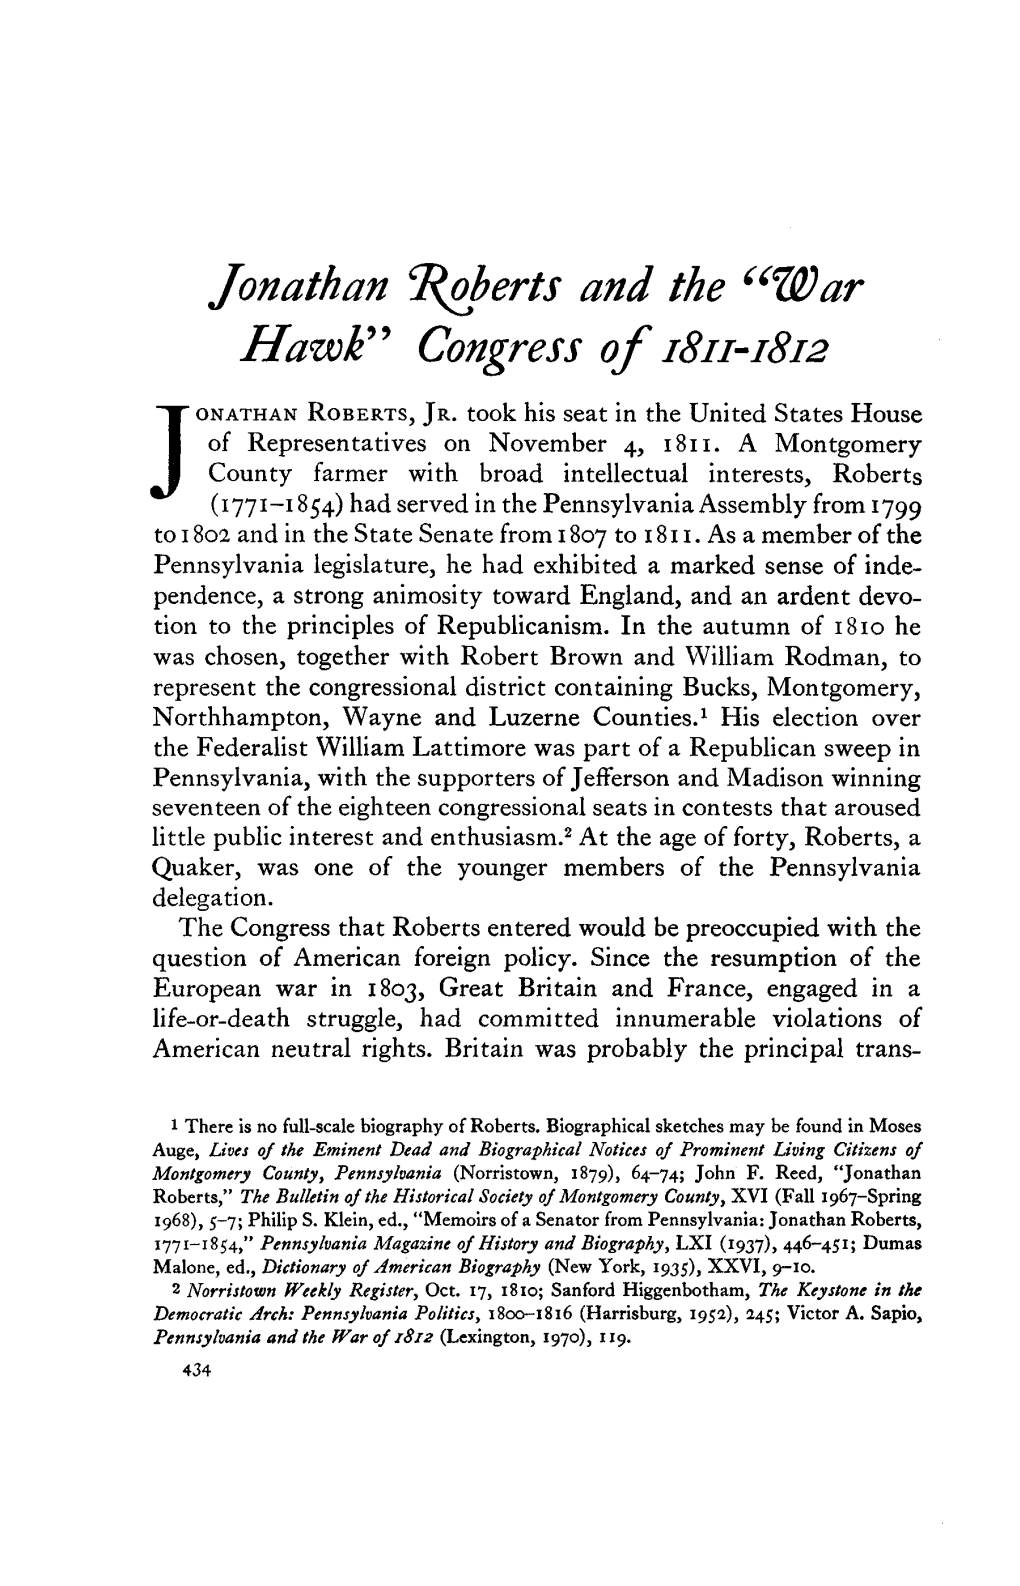 Jonathan Roberts and the "War Hawk" Congress of 1811-1812